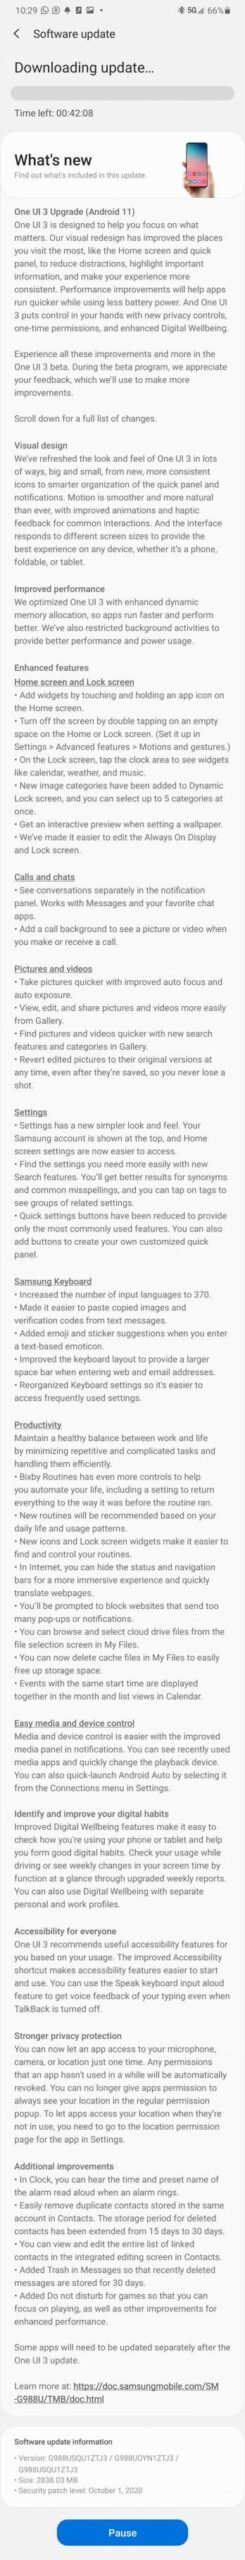 Samsung One UI 3.0